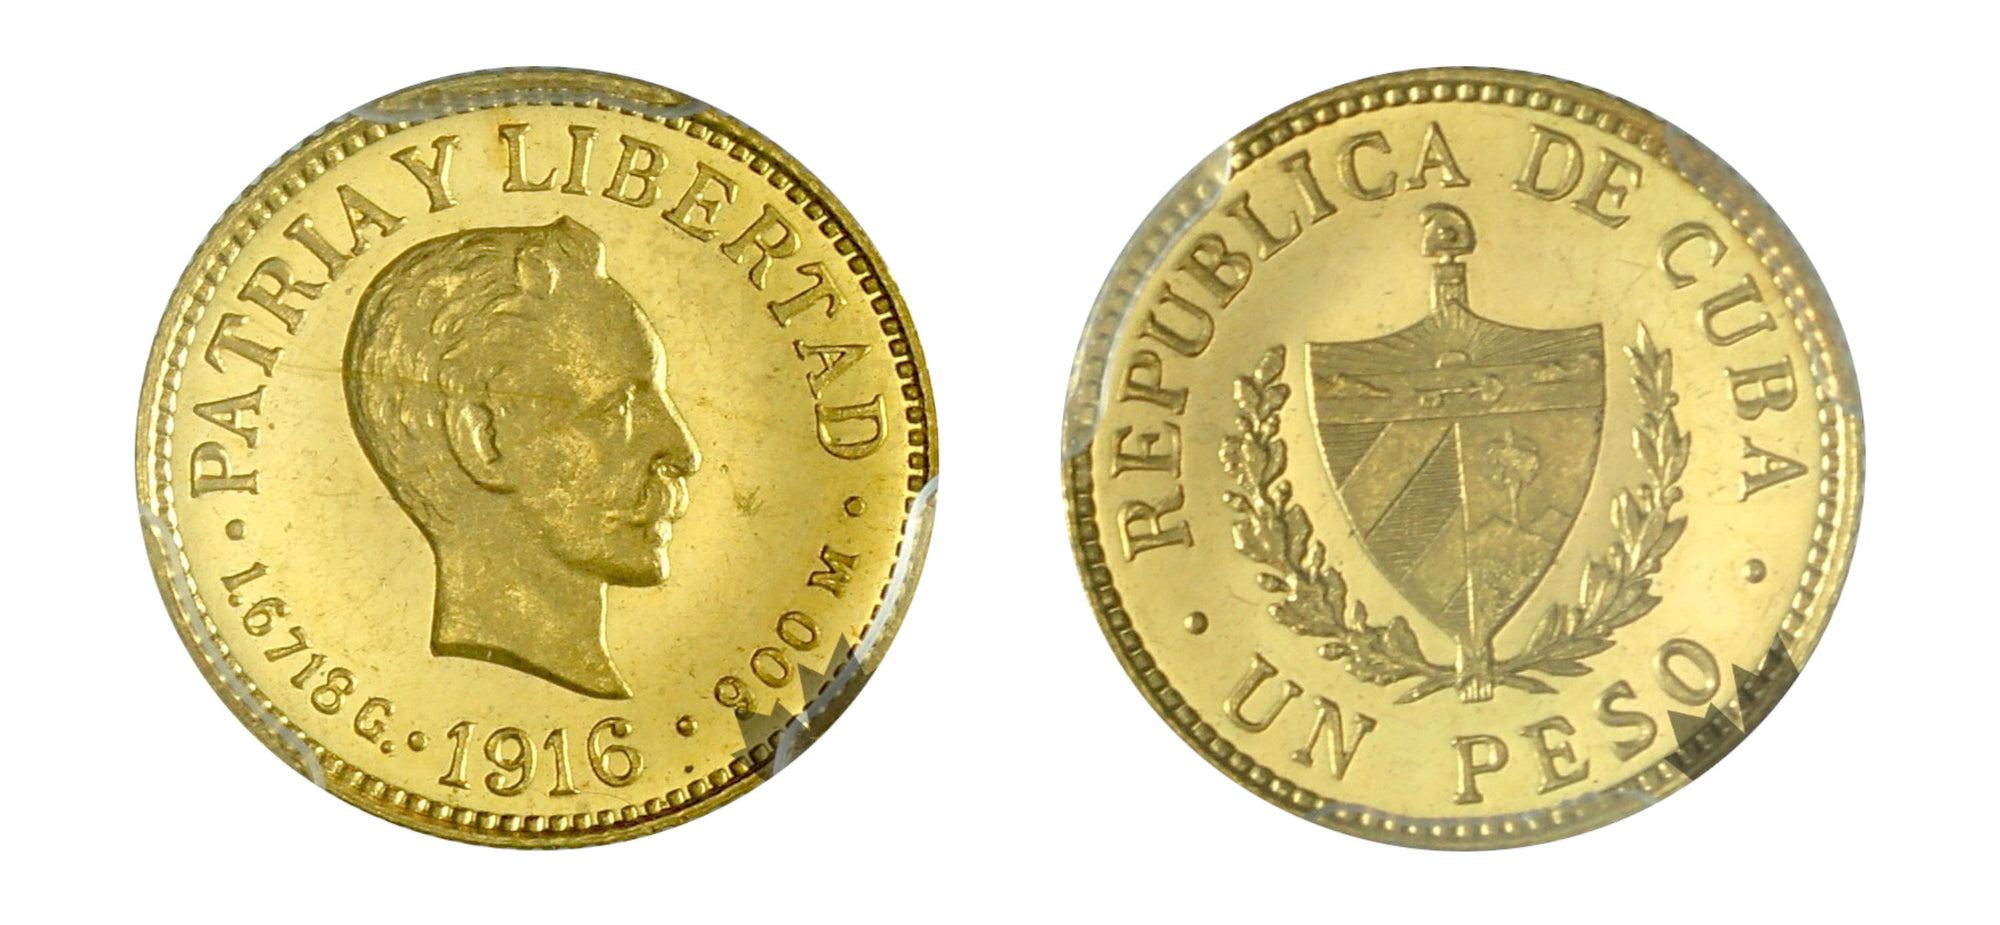 1916 Gold Peso NGC PF63 Cameo - Hard Asset Management, Inc